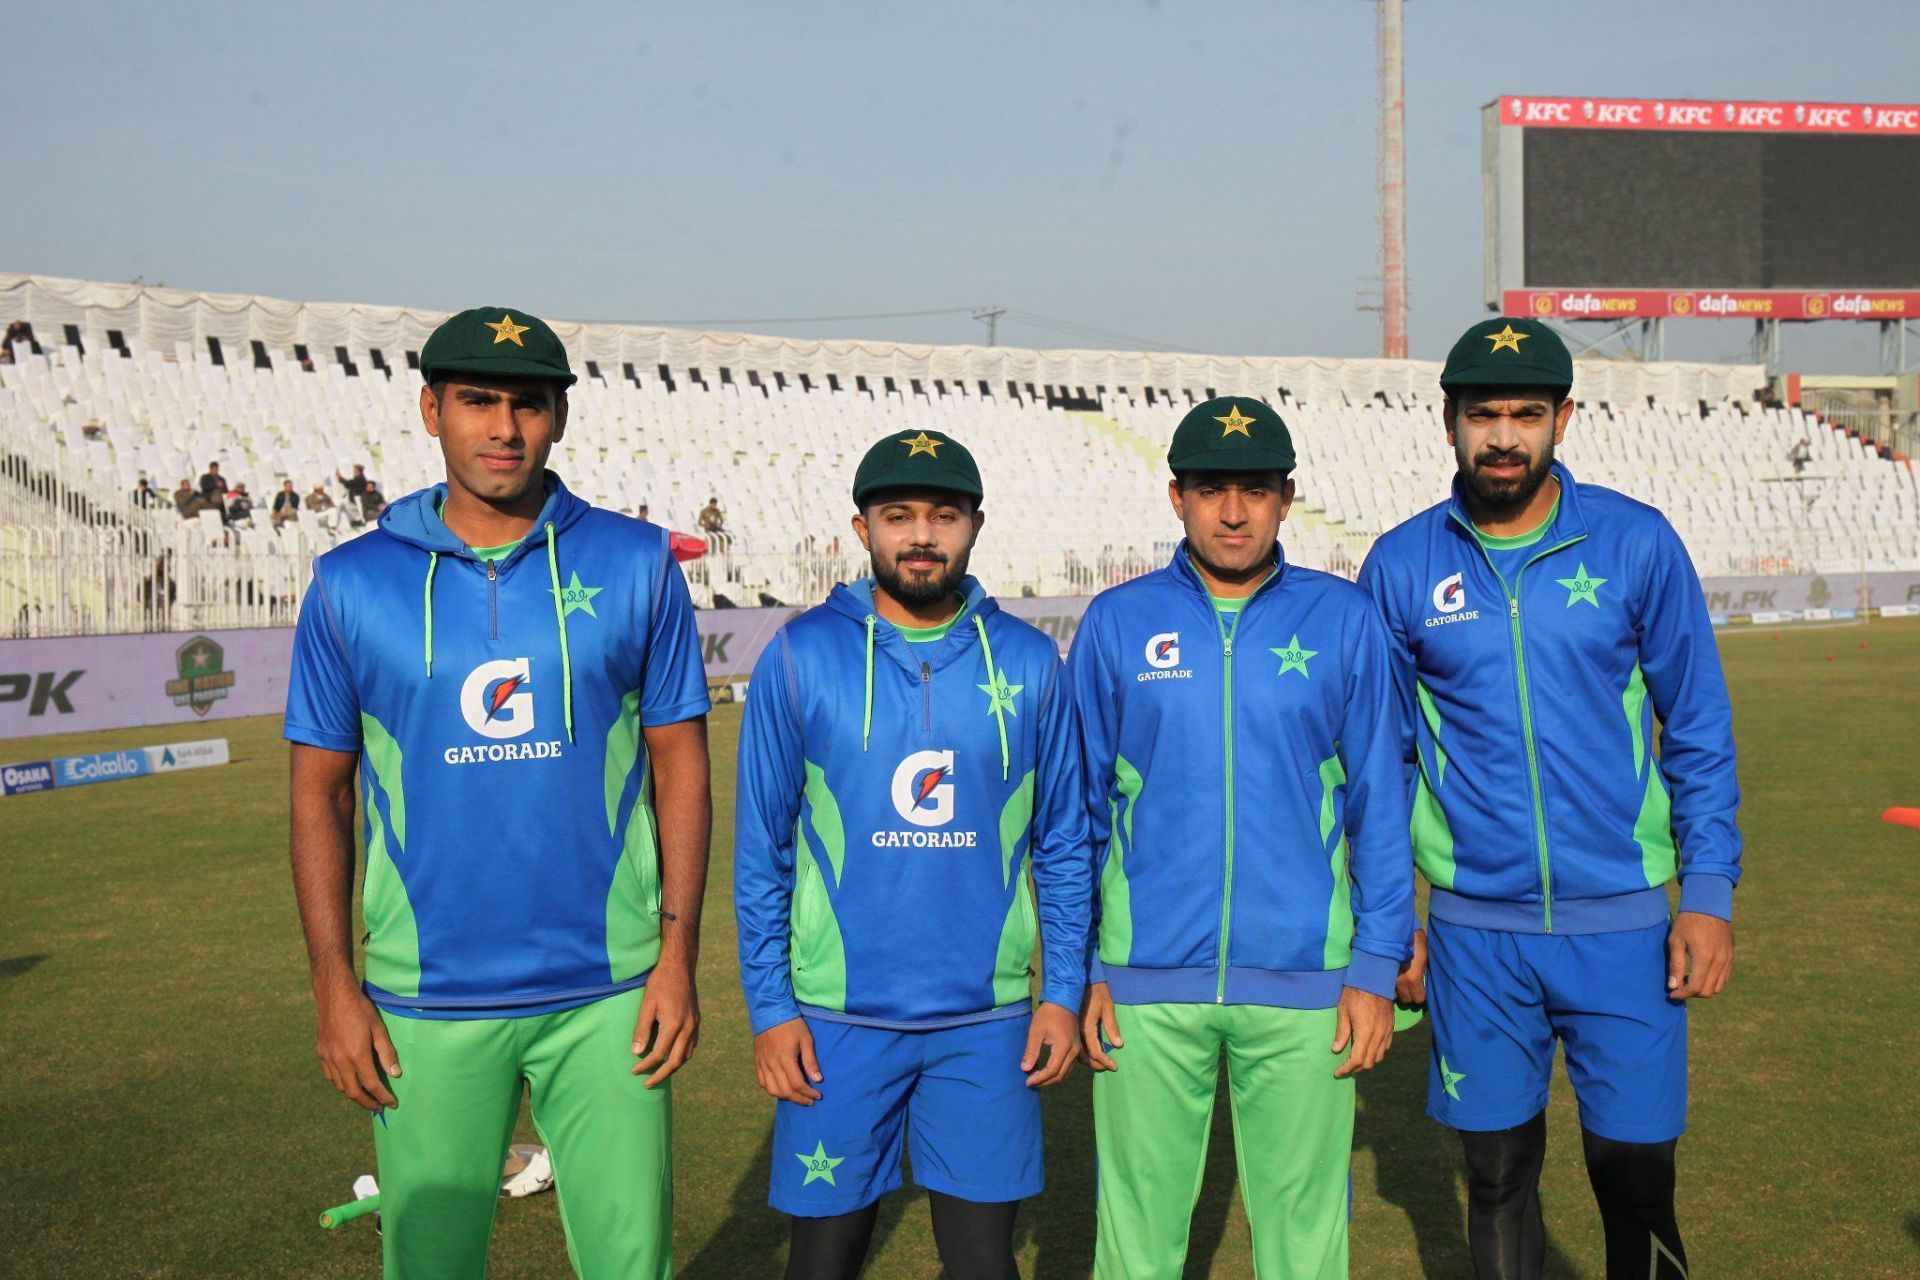 Mohammad Ali, Saud Shakeel, Zahid Mahmood, and Haris Rauf made their Test debuts for Pakistan. (Credits: Twitter)